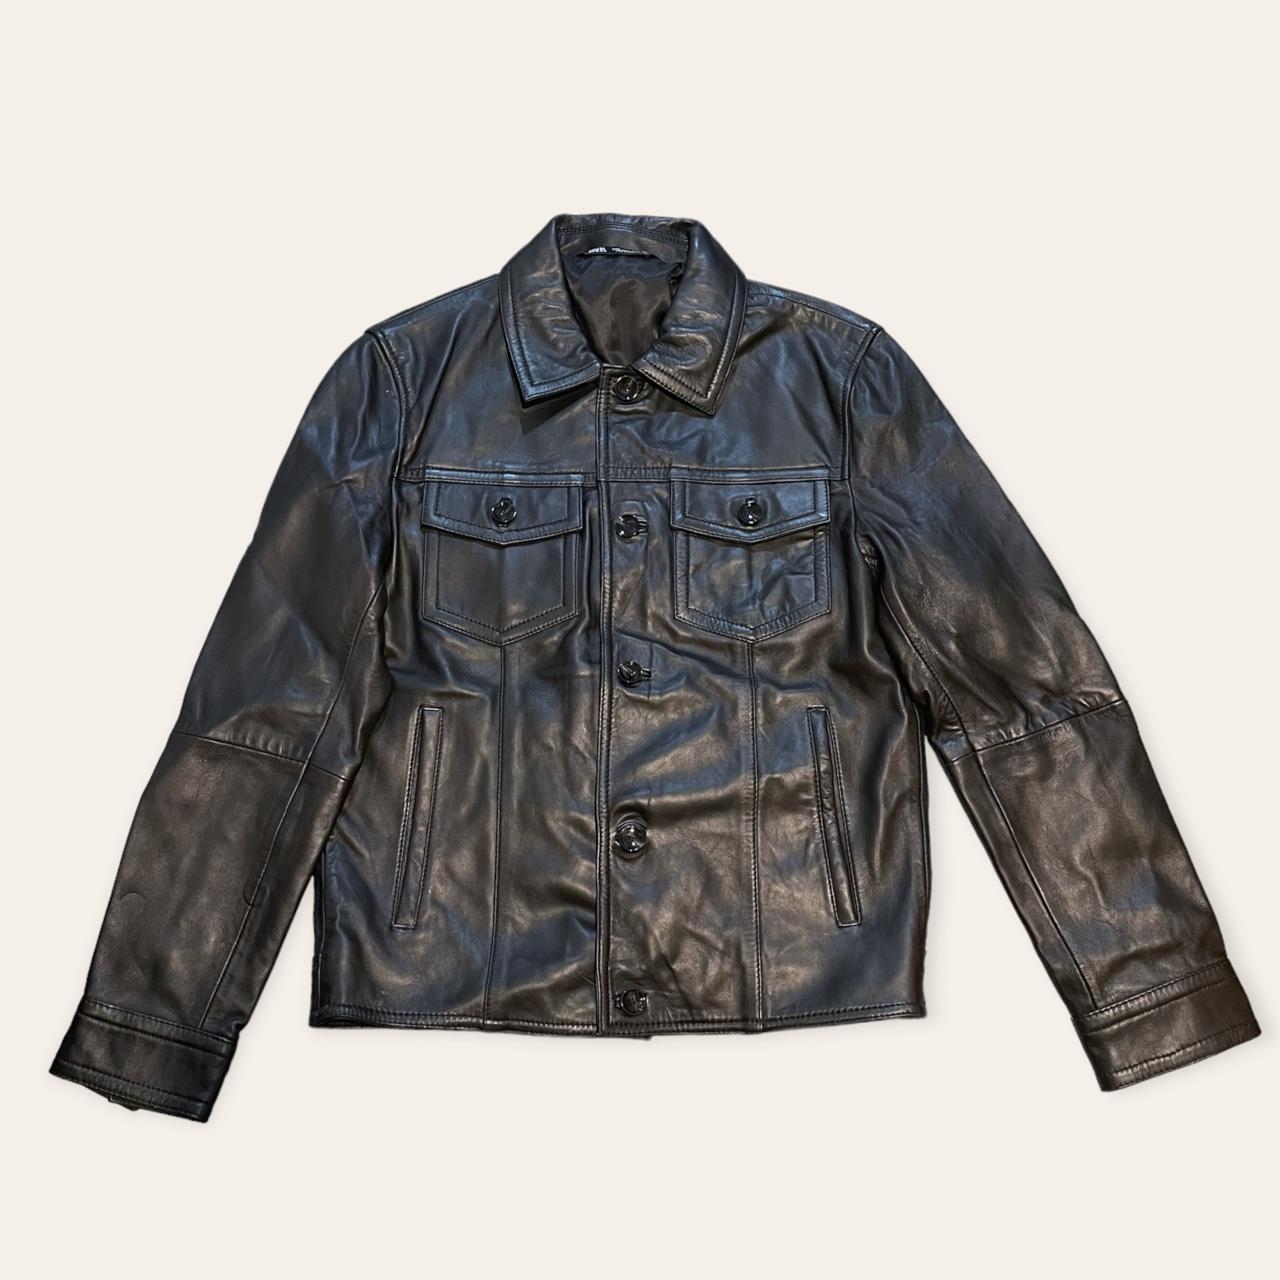 Zara Men's Black Jacket